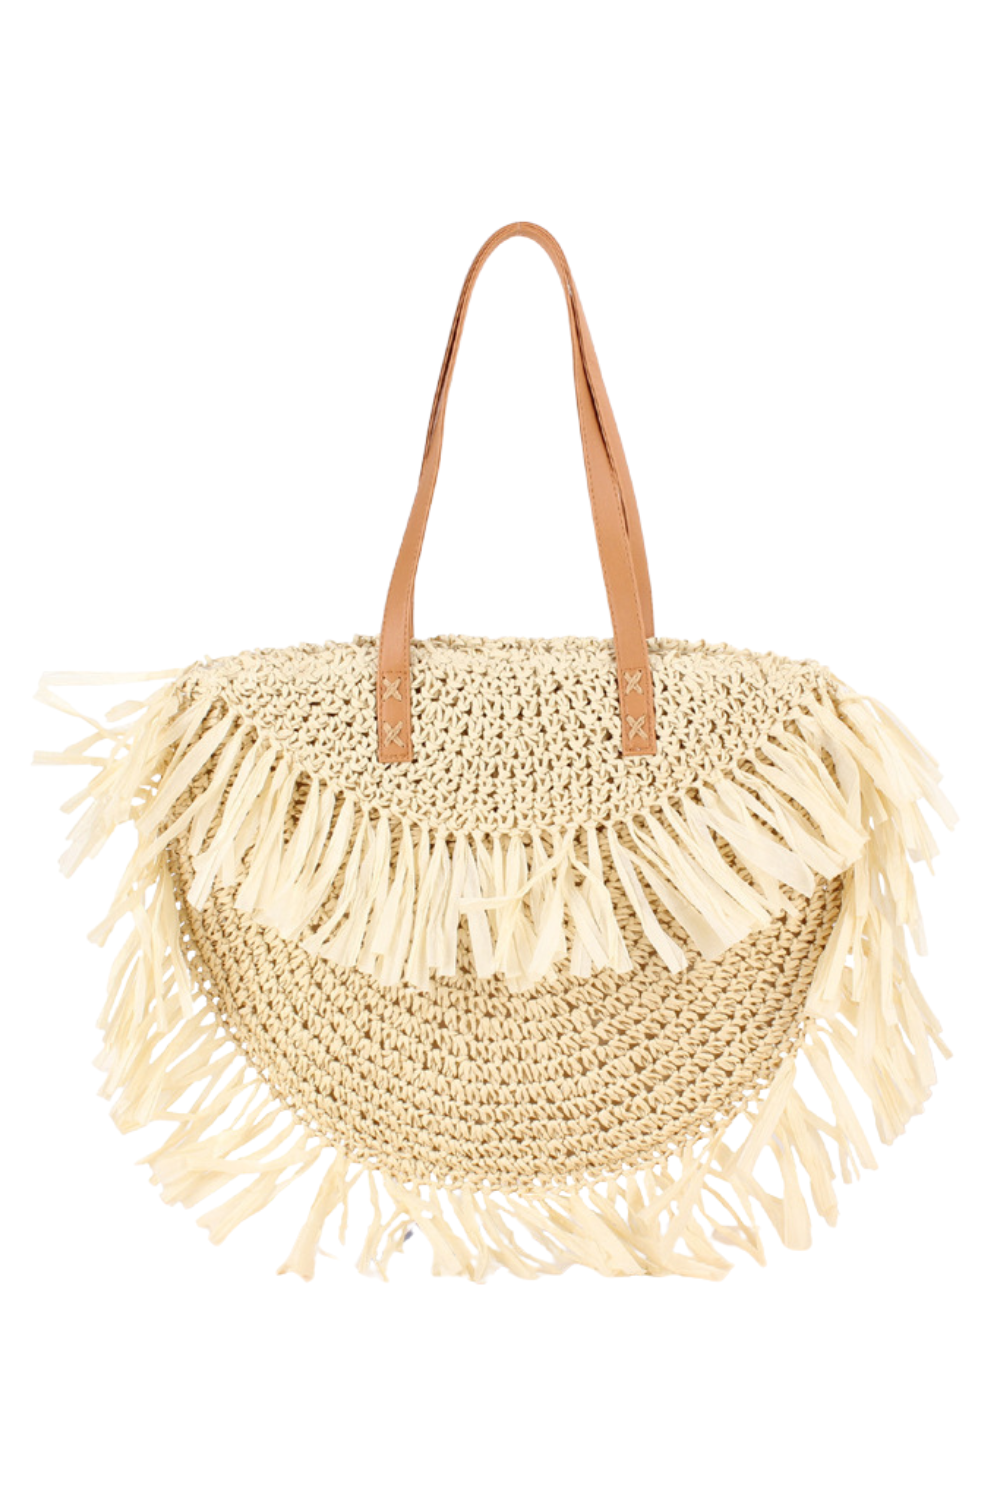 Round Woven Tote Handbag with Coconut Shells - I Am Kréyol